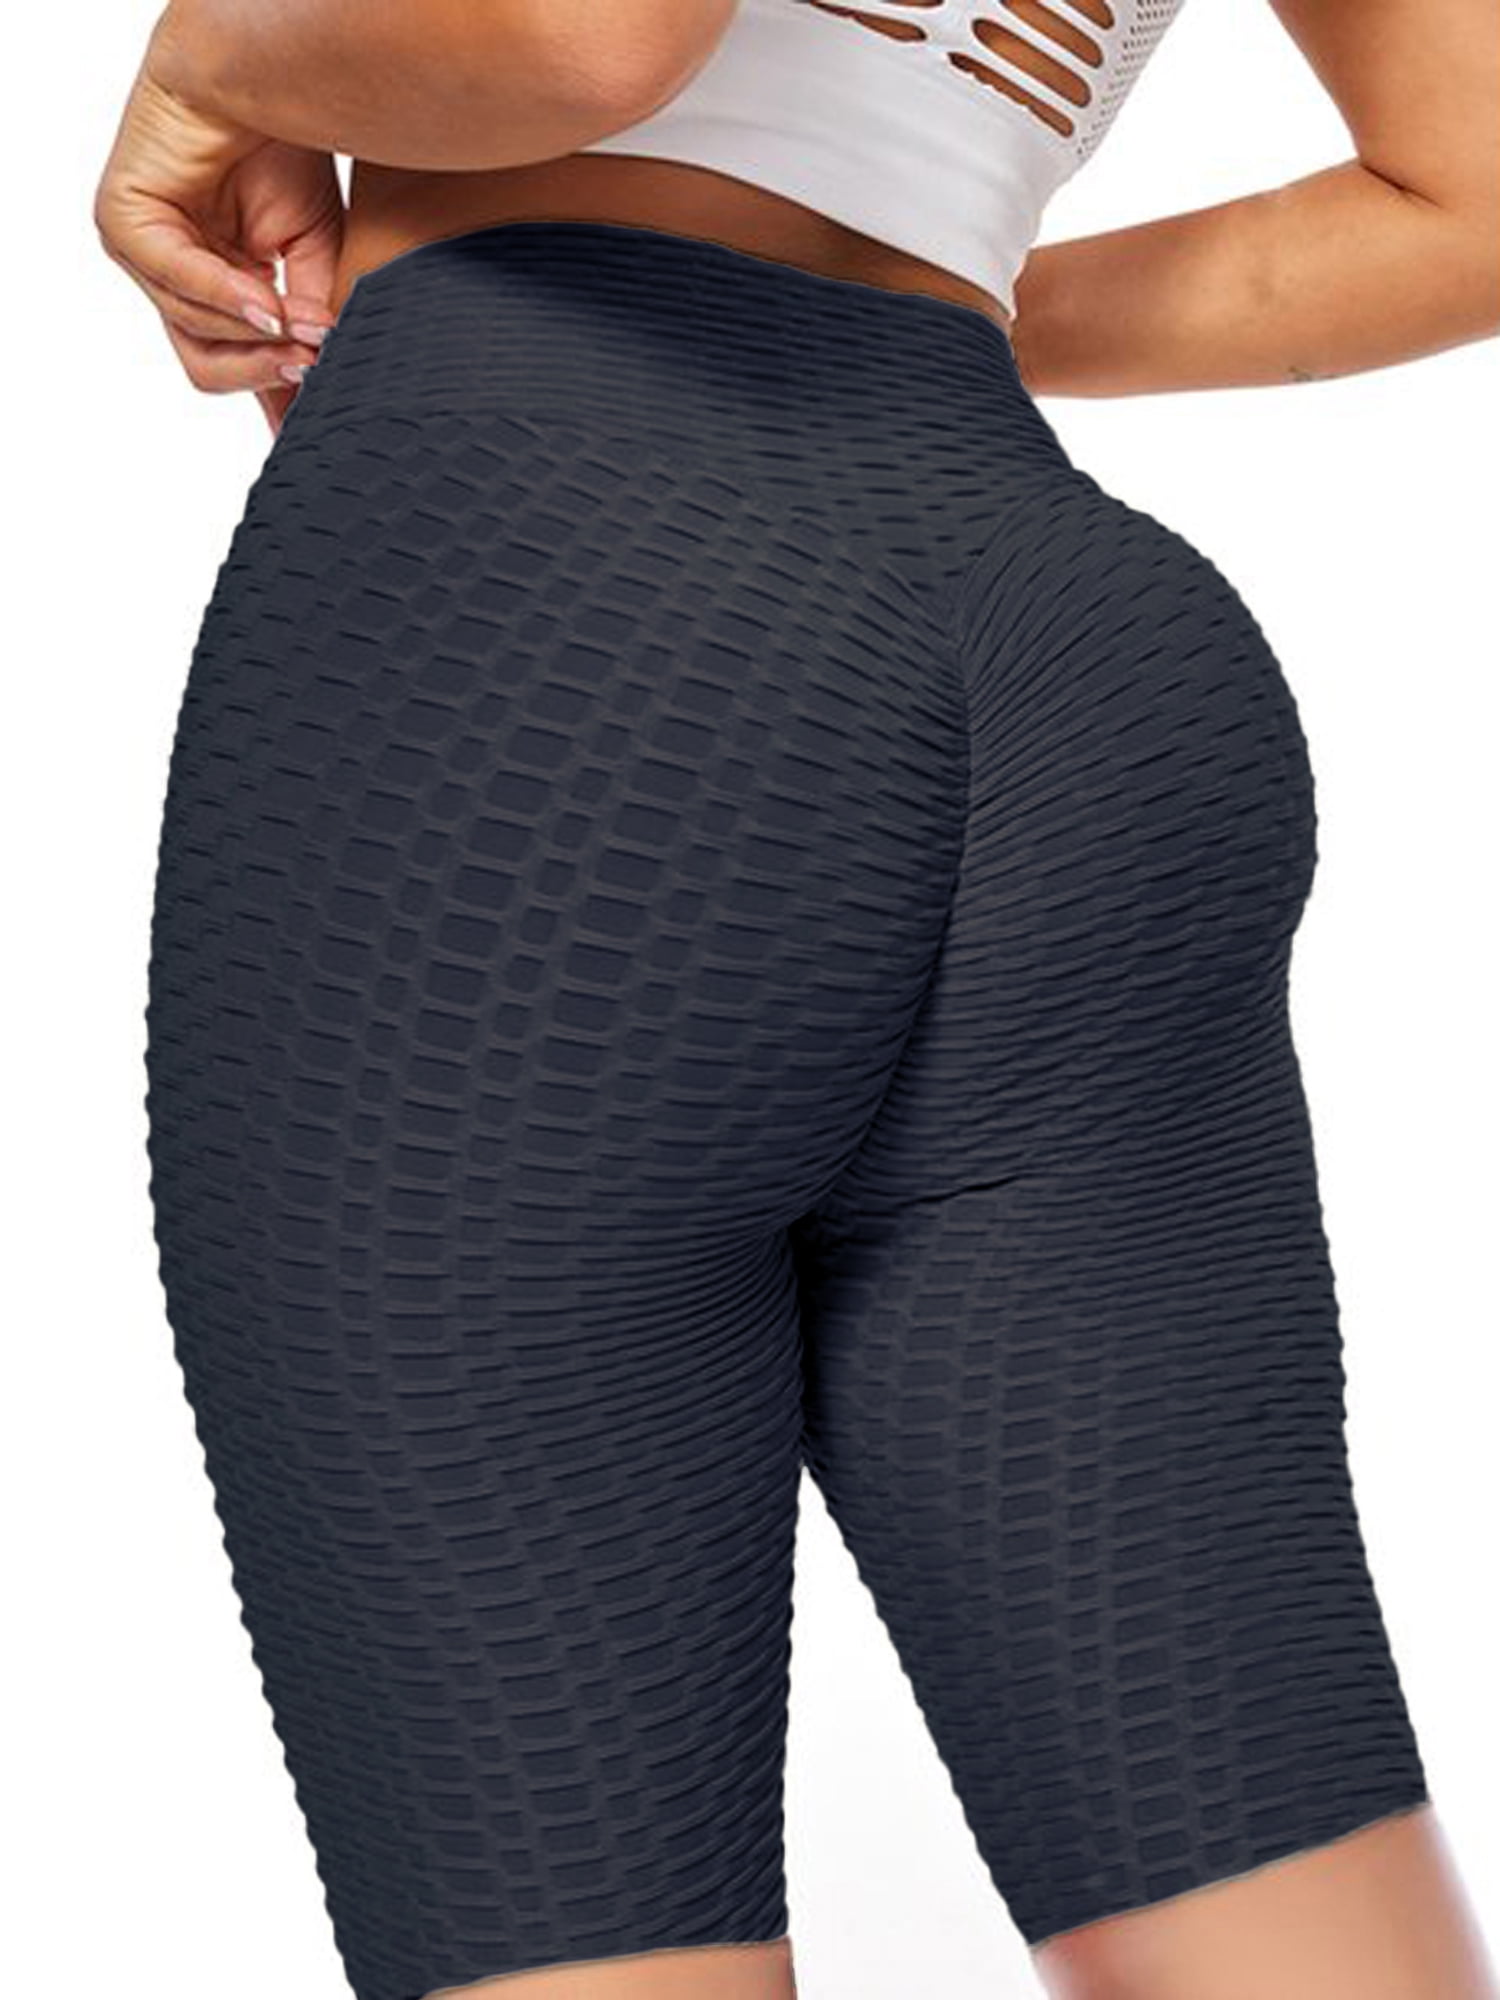 CZYAM Yoga Pants for Women High Waist Tummy Control Yoga Leggings 4 Way Stretch Workout Running Pants 